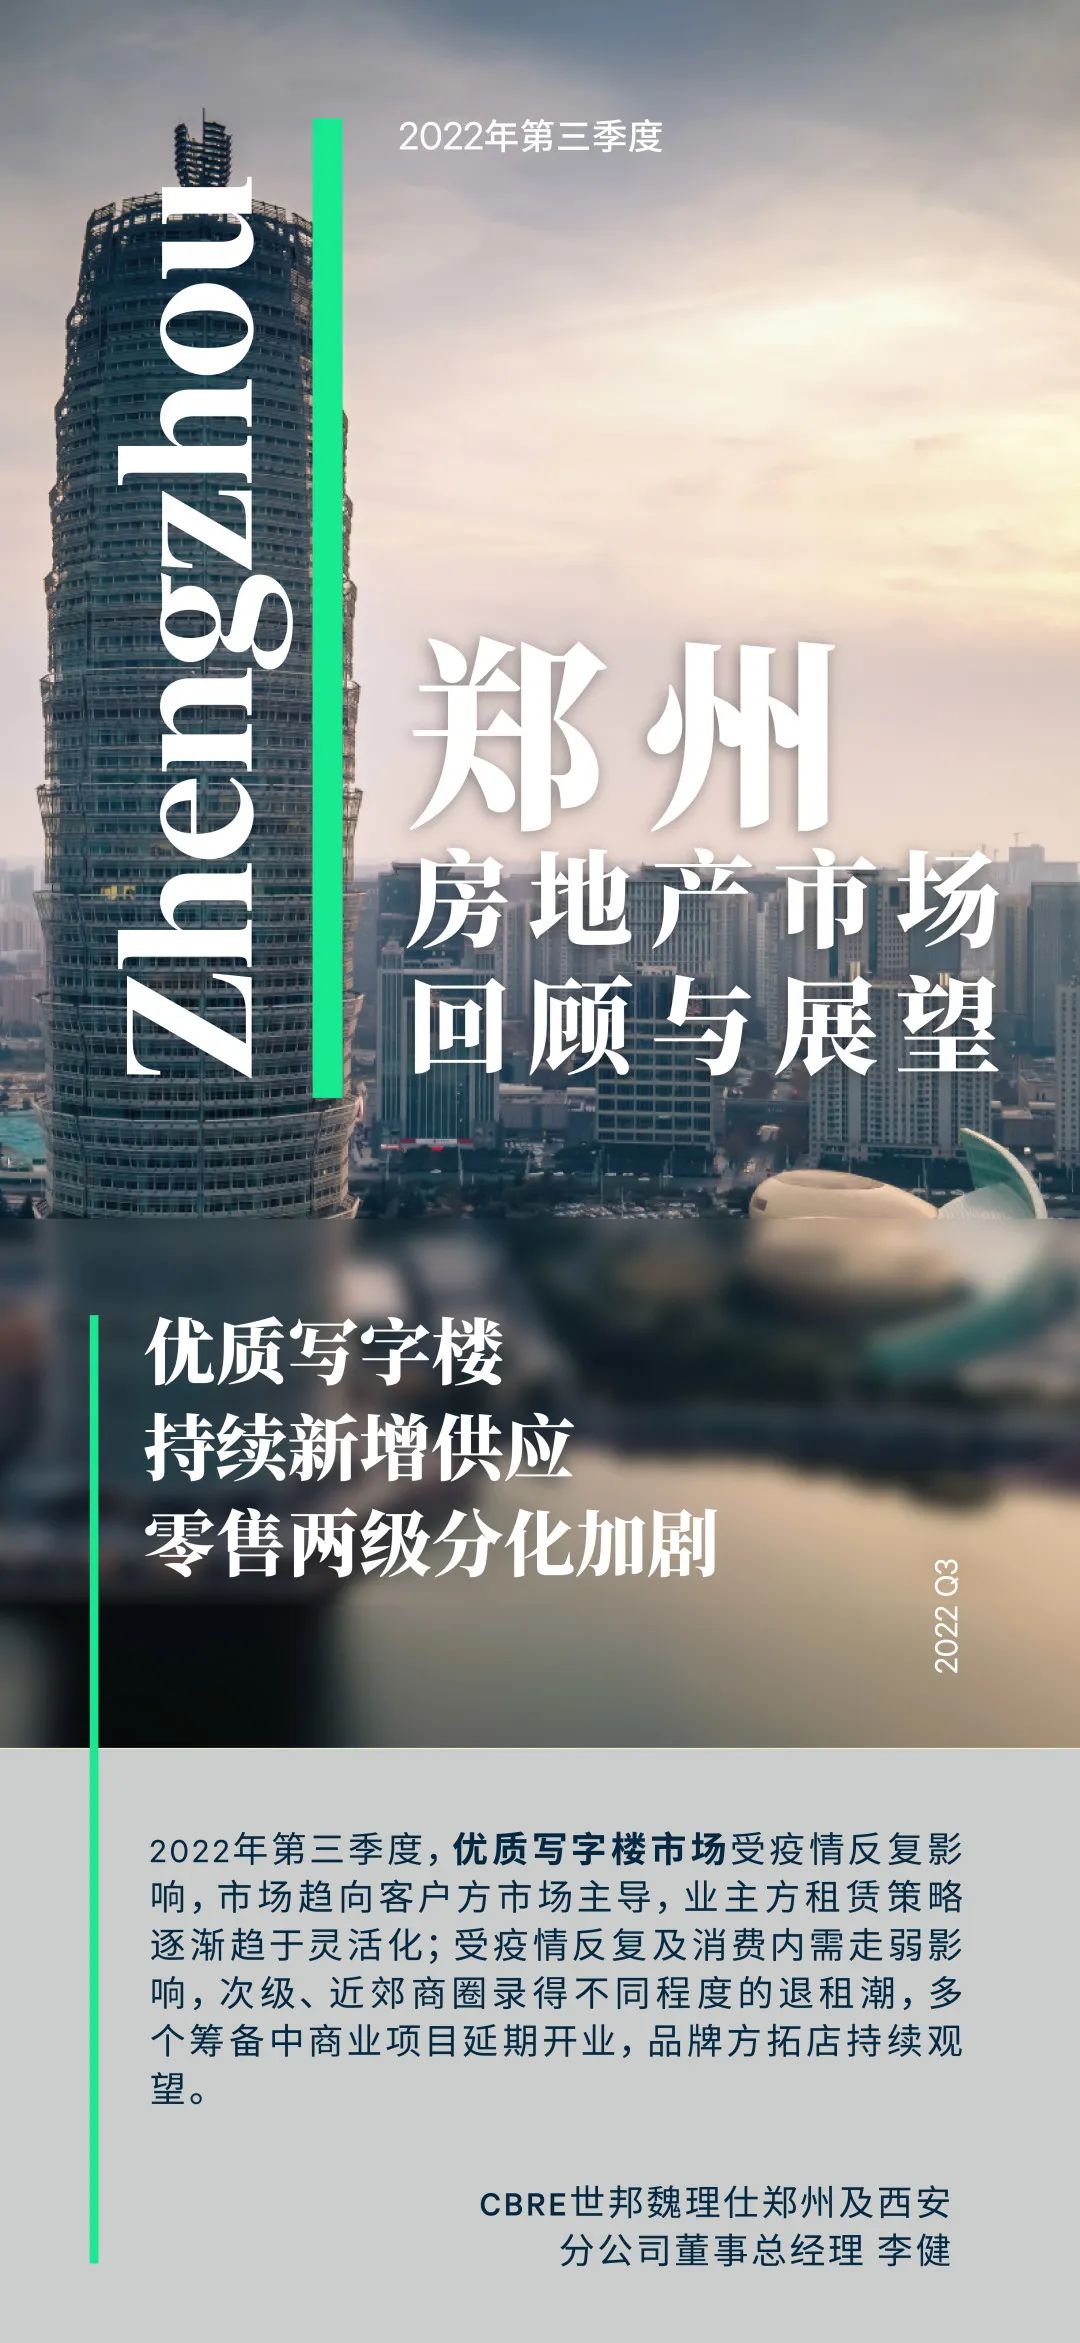 CBRE：2022年第三季度郑州房地产市场回顾与展望